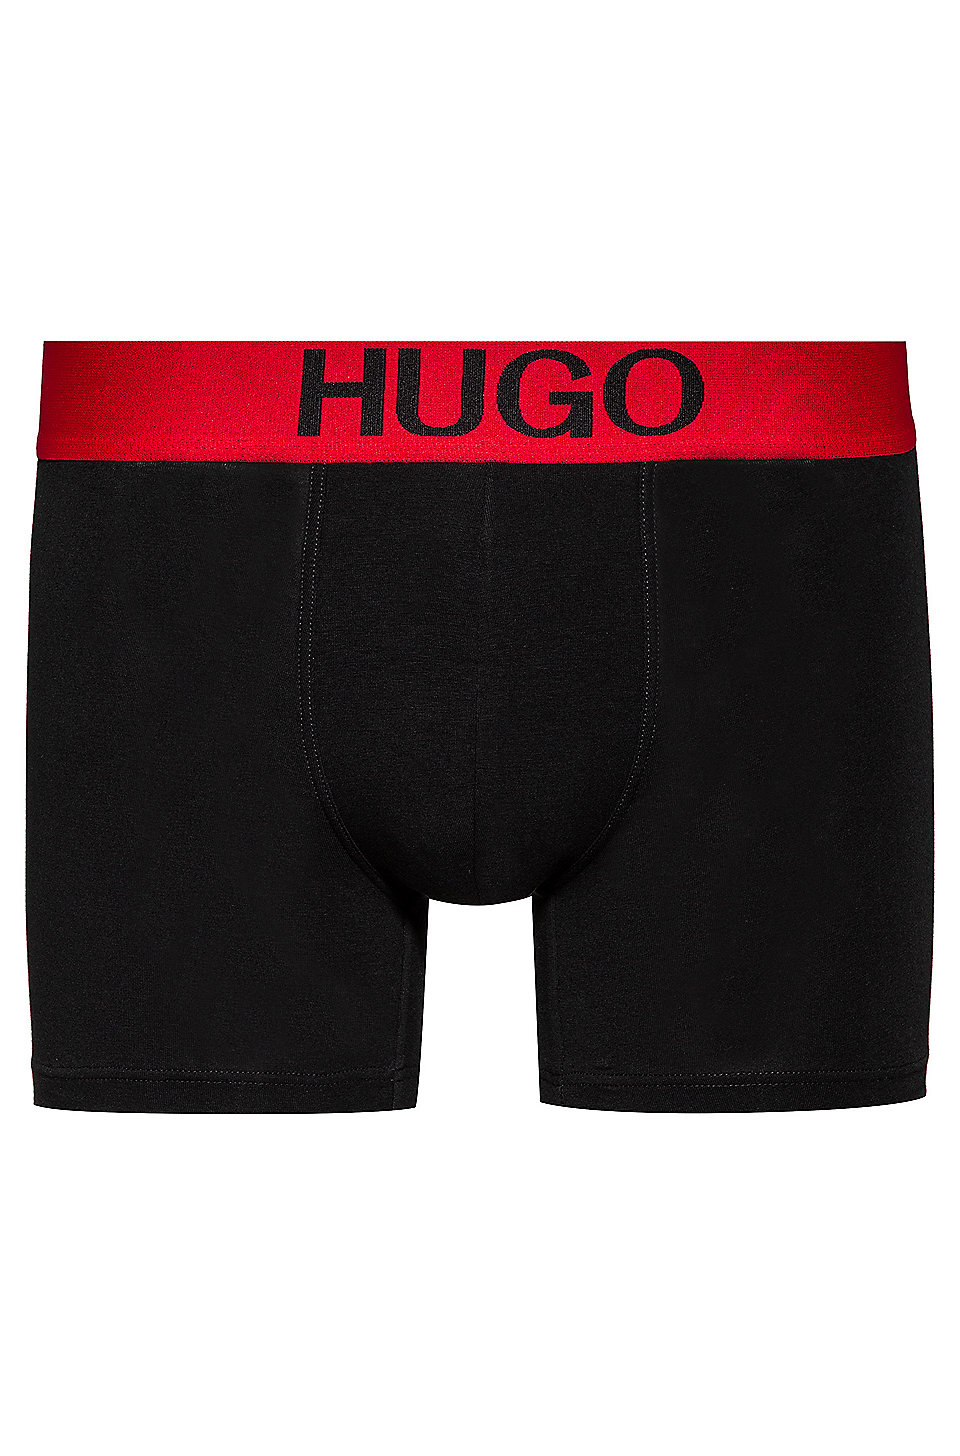 Трусы hugo. Hugo Boss Cotton stretch. Boxer Hugo Boss. Трусы Hugo Boss джоки. Hugo Boss трусы мужские упаковка.